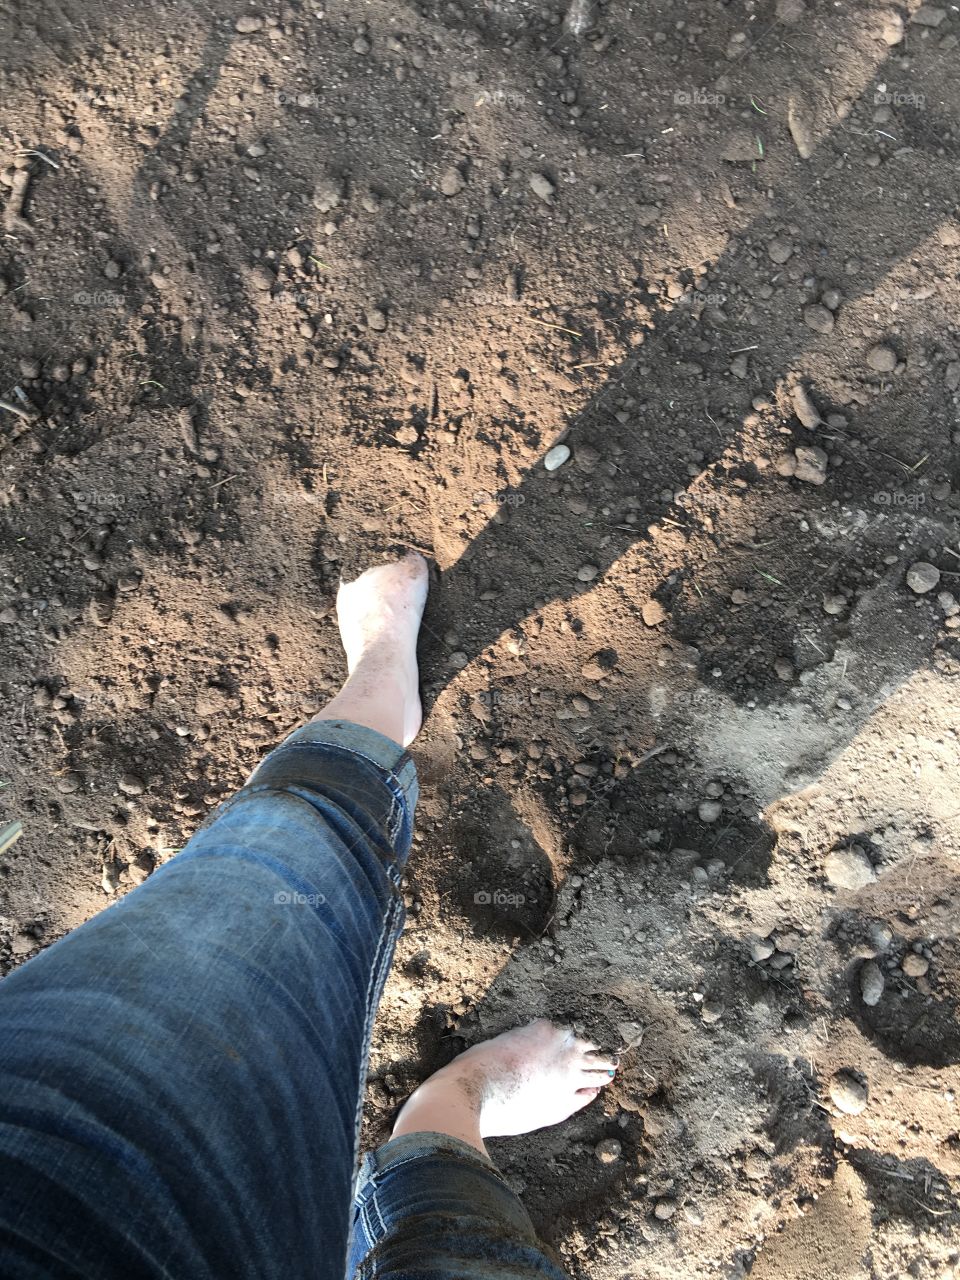 Barefoot and gardening 